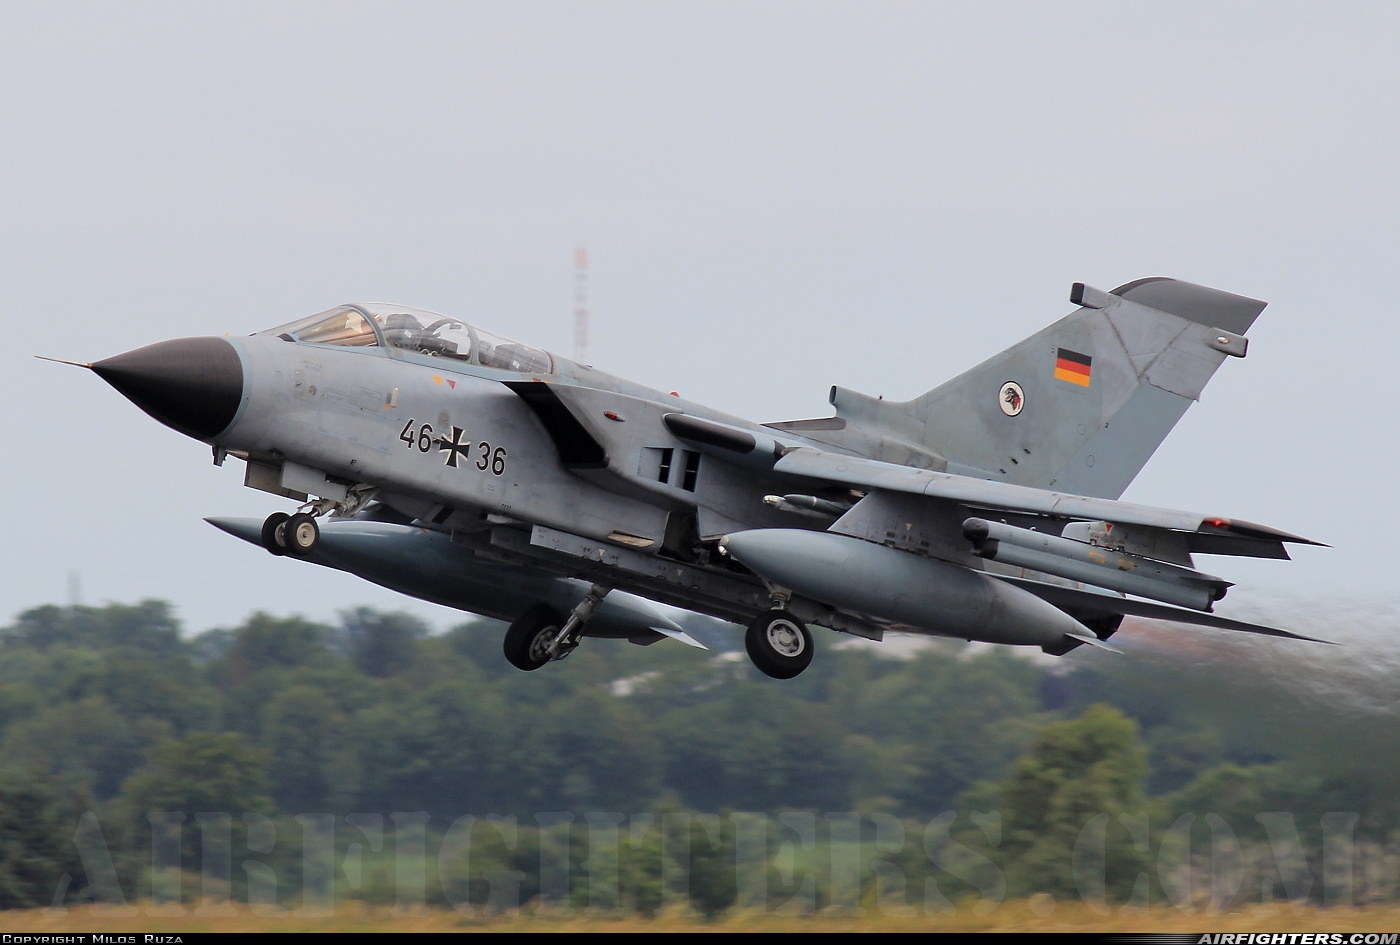 Germany - Air Force Panavia Tornado ECR 46+36 at Schleswig (- Jagel) (WBG / ETNS), Germany